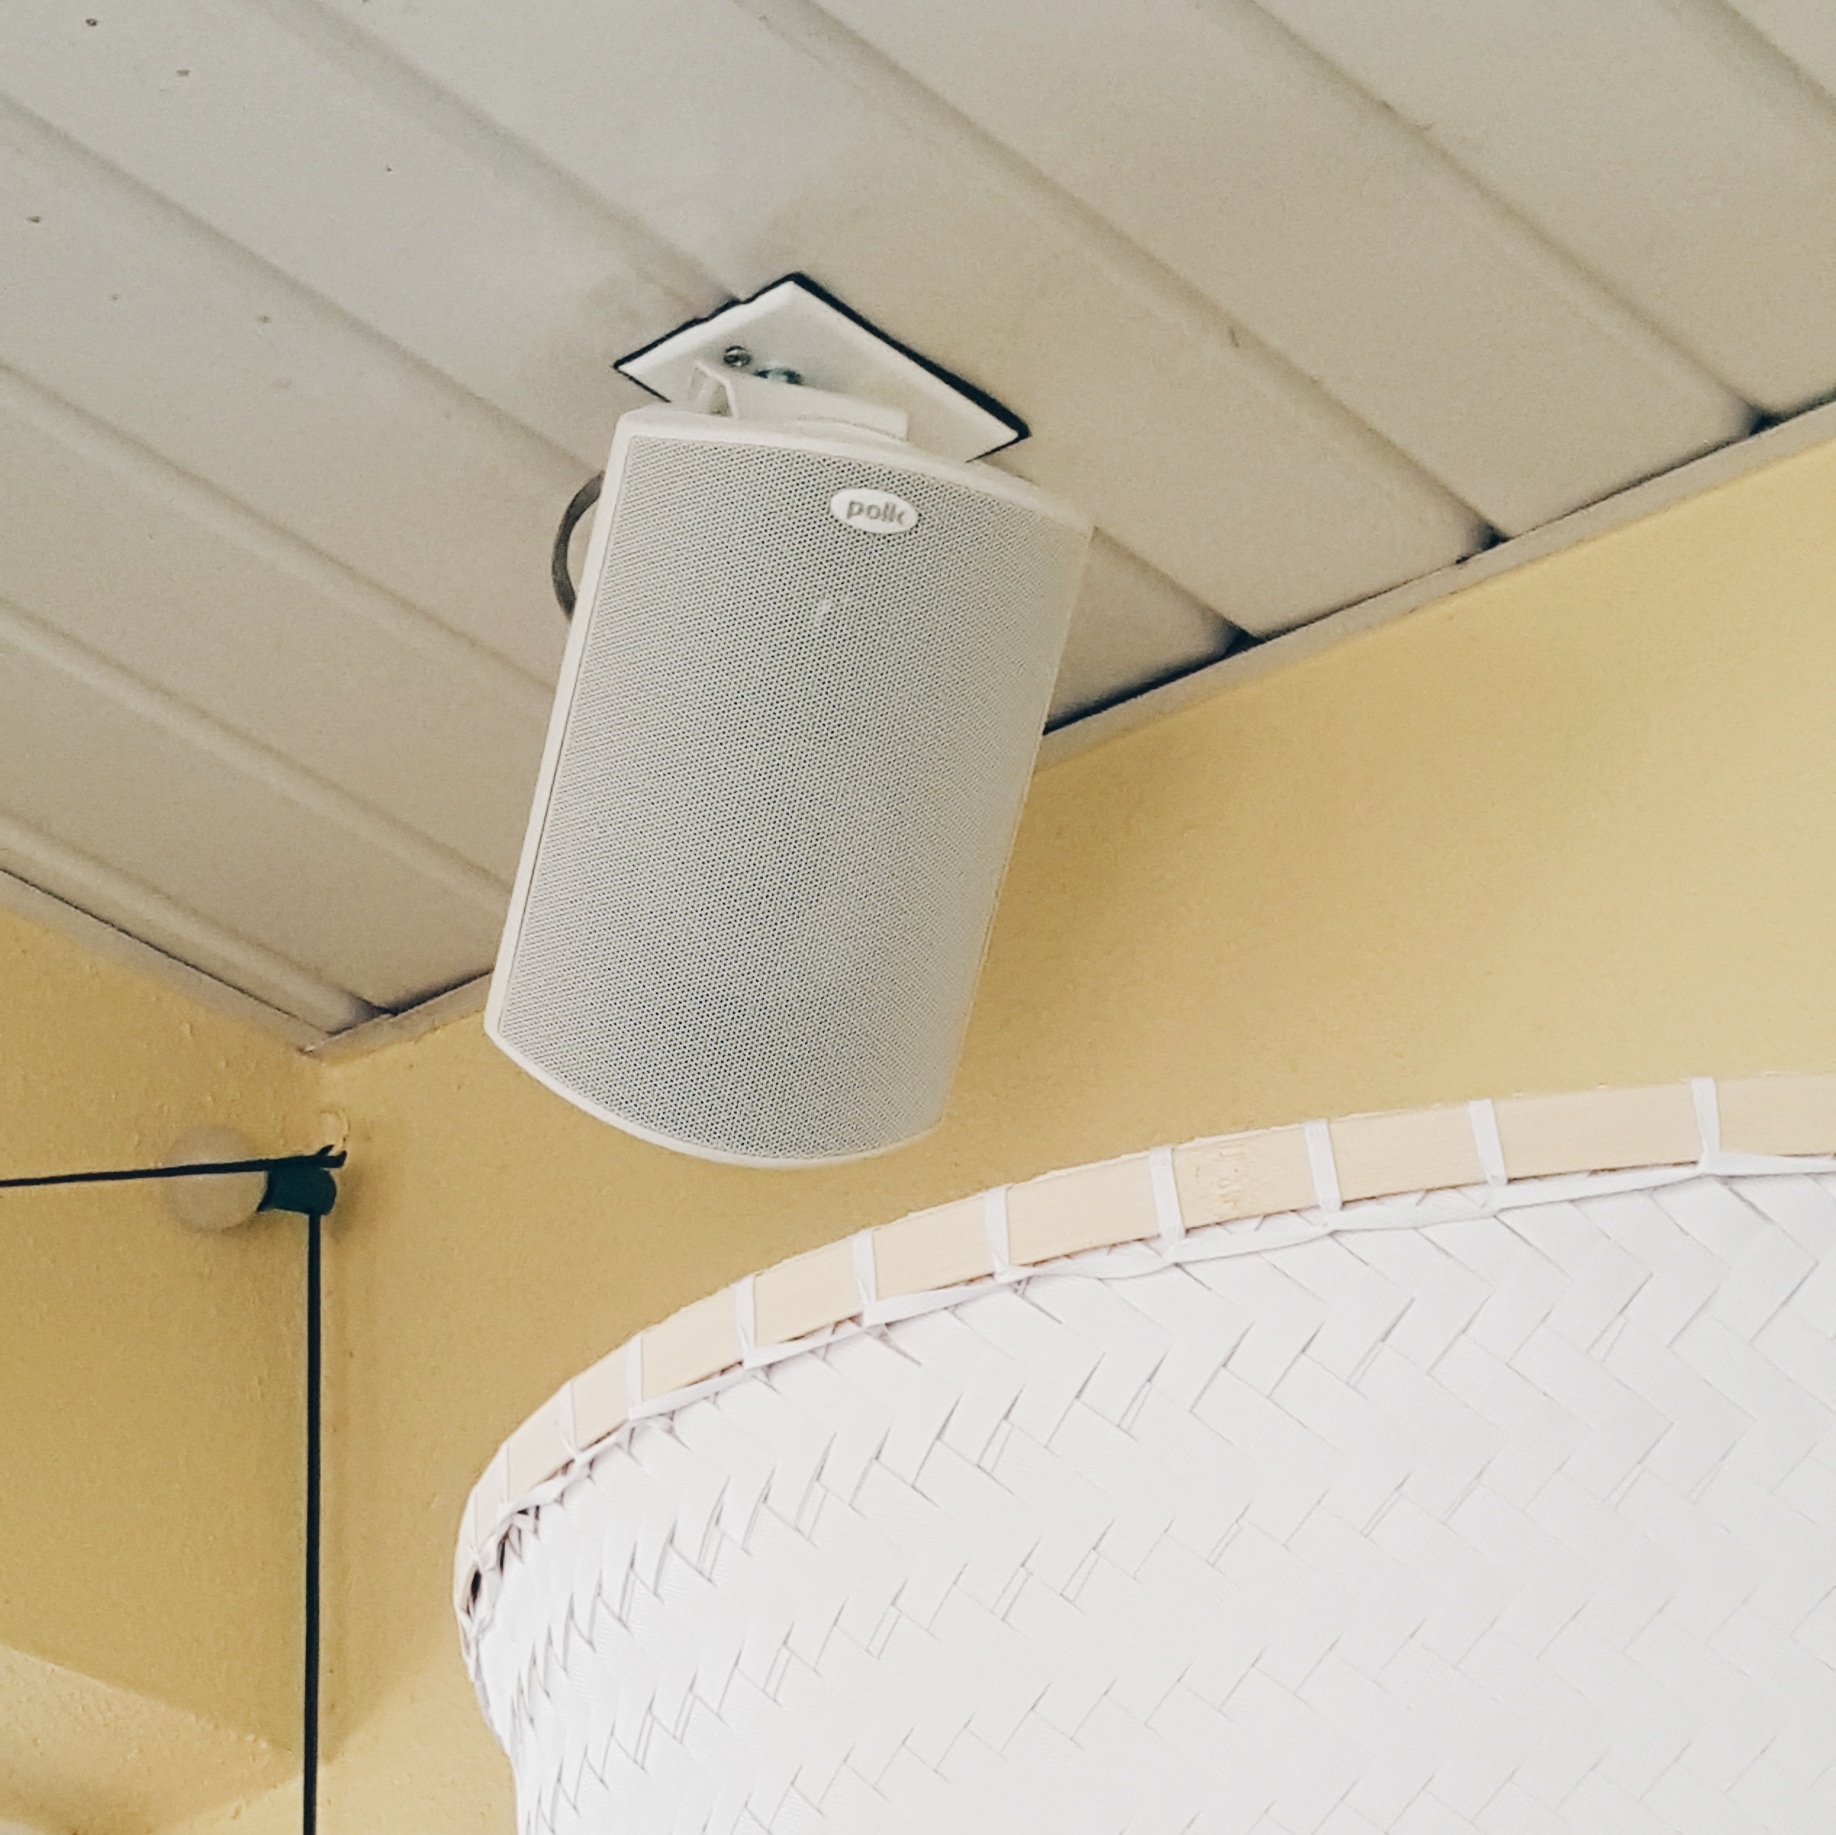 Polk Audio Speakers Outdoor back porch makeover amazon